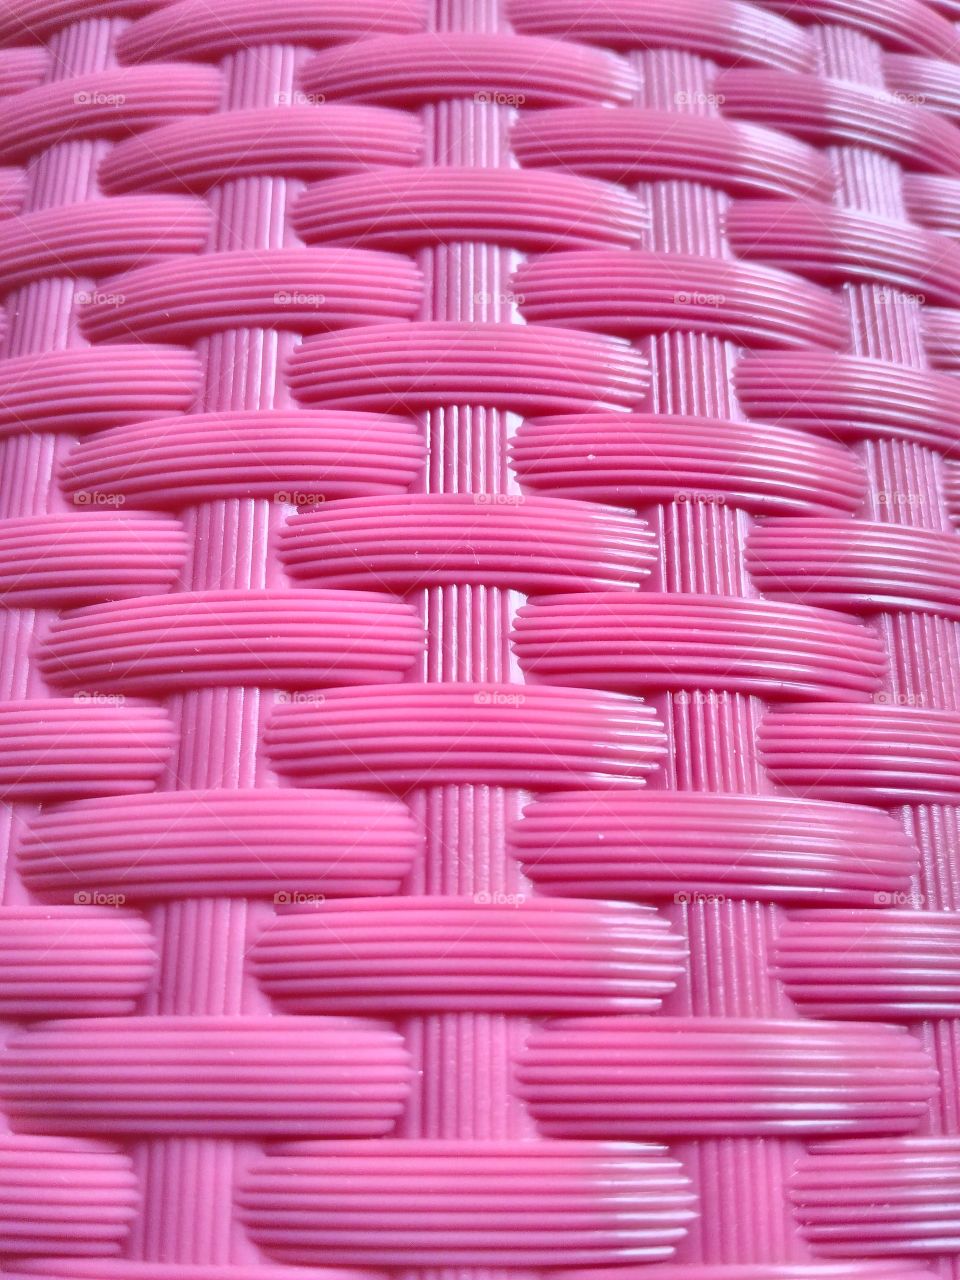 Crisscross of plastic basket